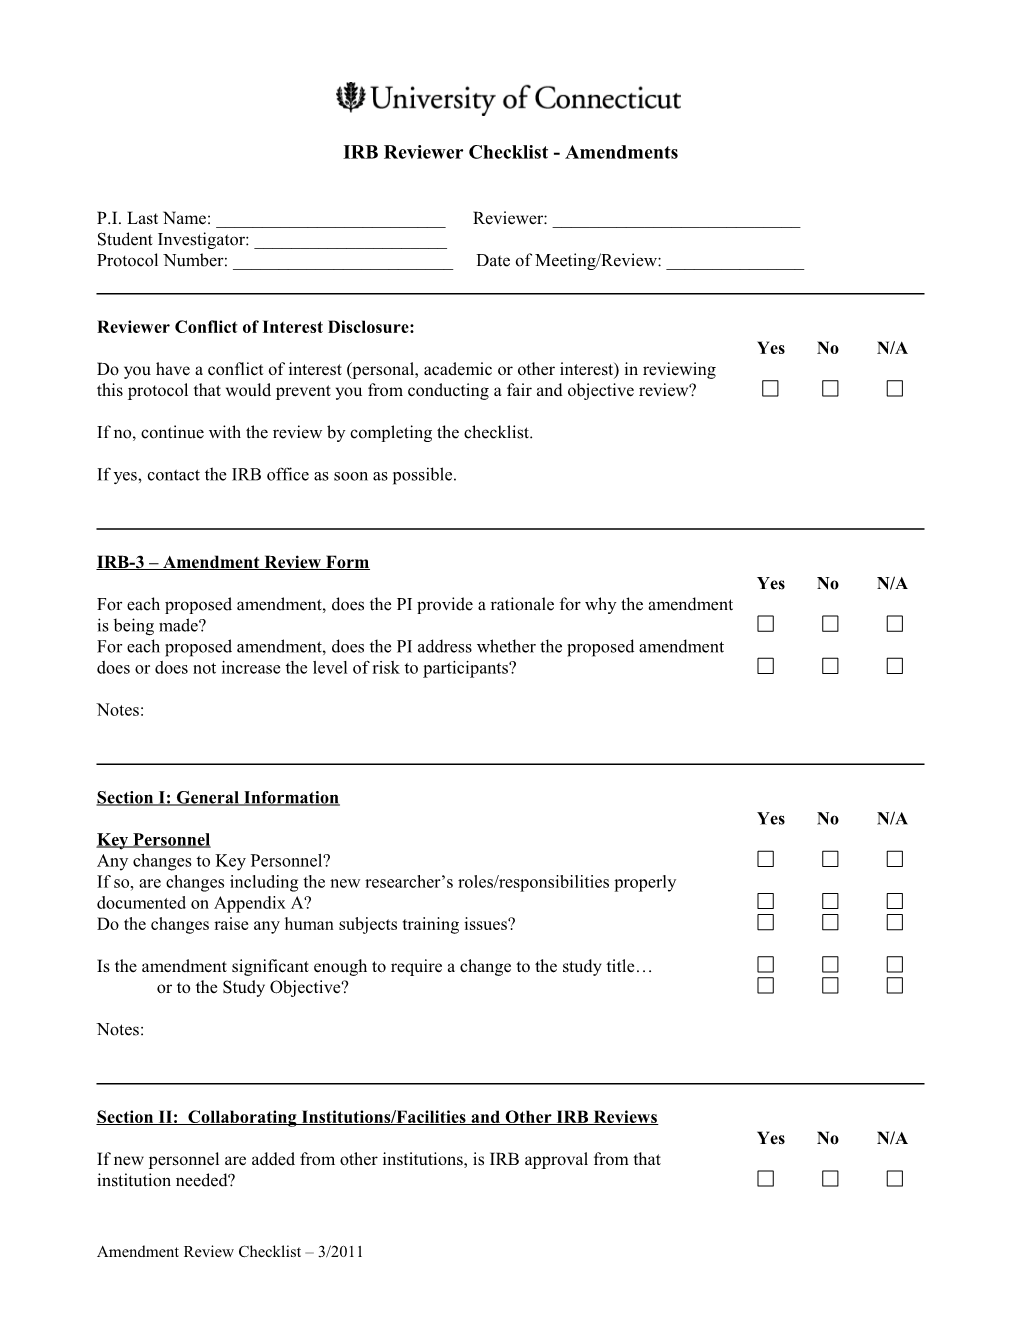 IRB Approval Checklist (Per 46